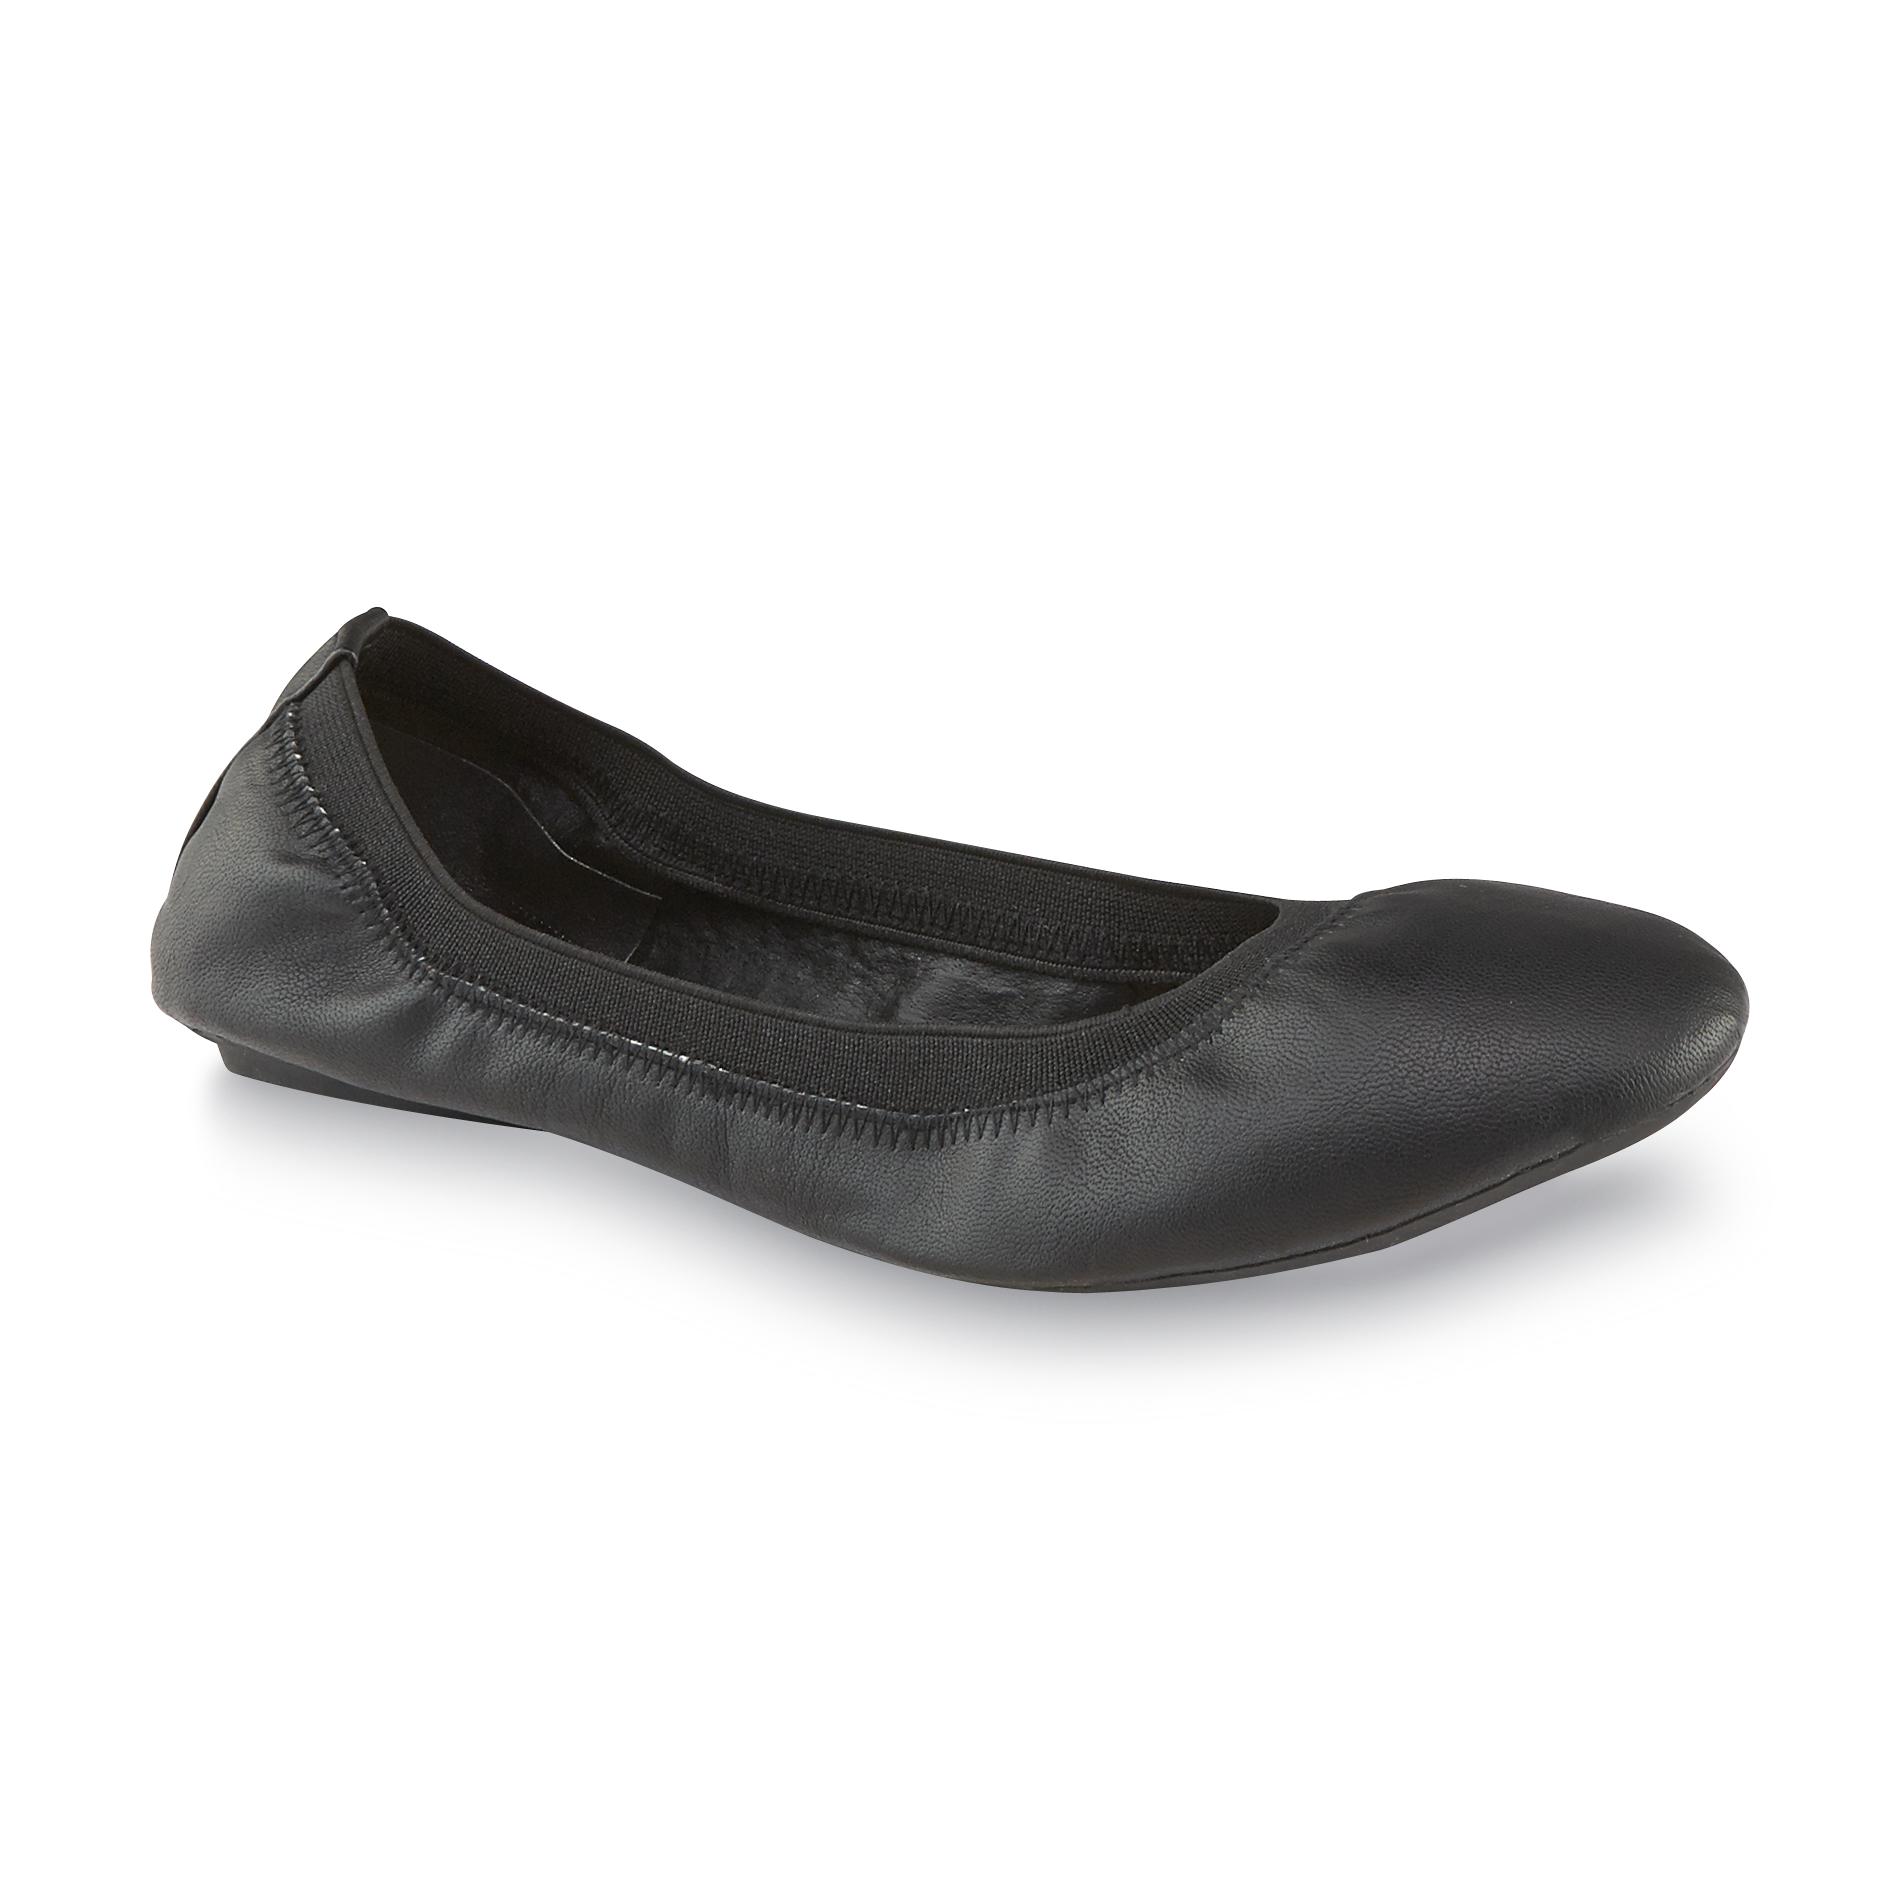 Charles Albert Shoes Women's Hester Black Scrunch Ballerina Flat